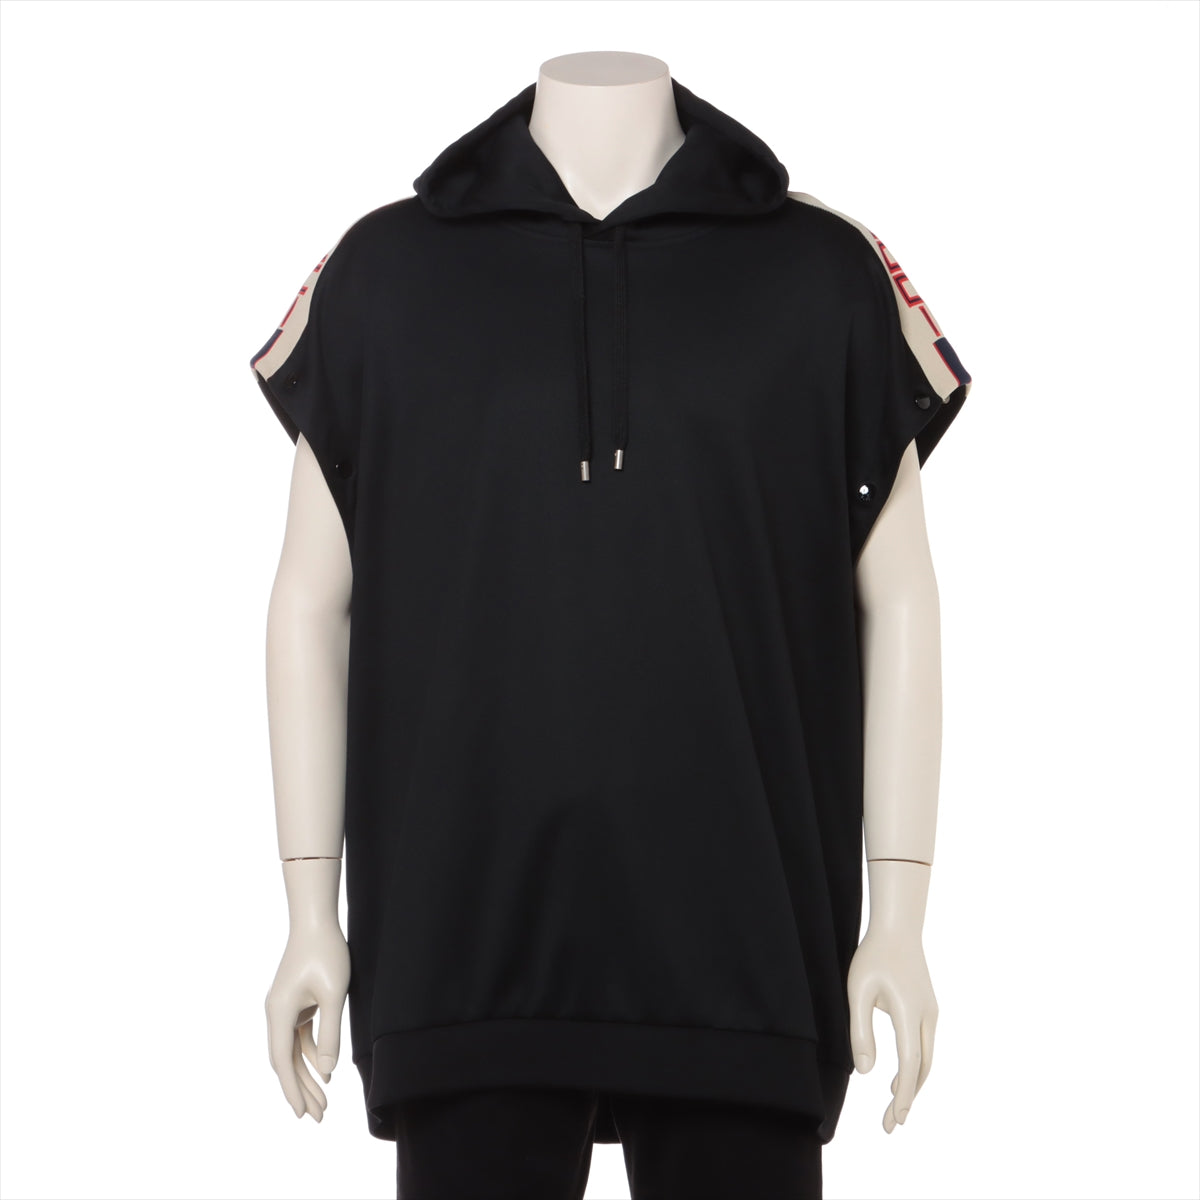 Gucci 18SS Cotton & polyester Parker XXXL Men's Black  475354 2wayTechnical Jersey Sweatshirt Removable sleeves